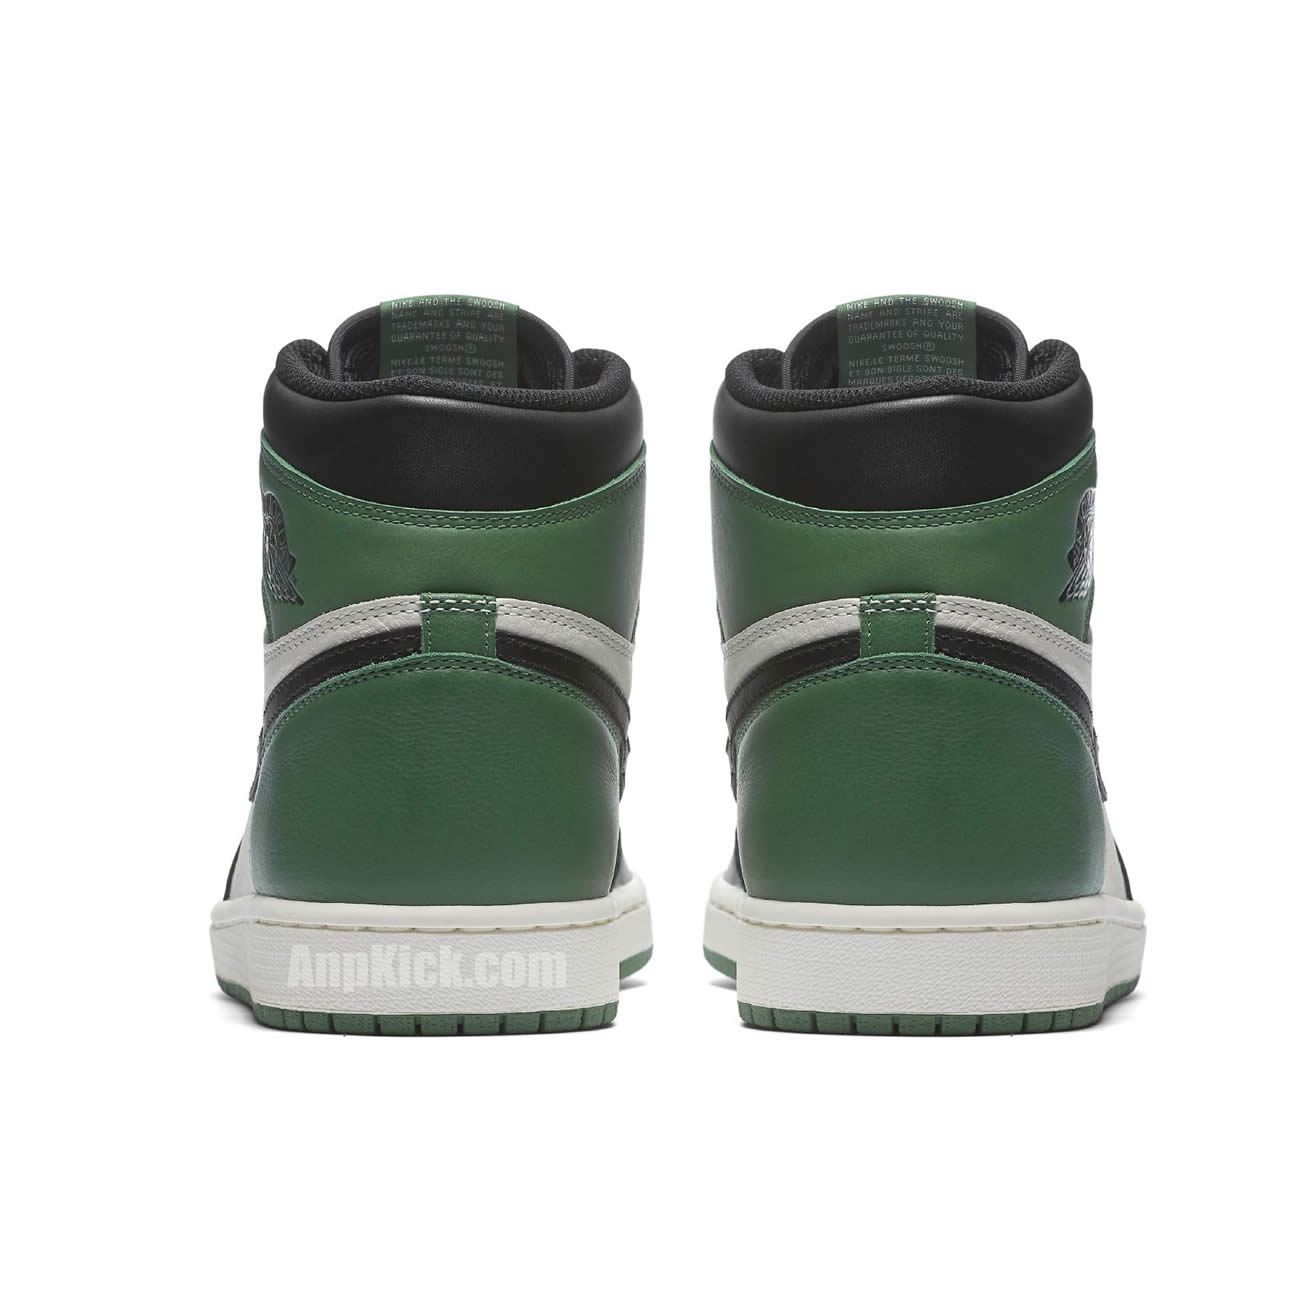 "Pine Green" New Air Jordan 1 High OG Mens GS Shoes 555088-302 Release Date